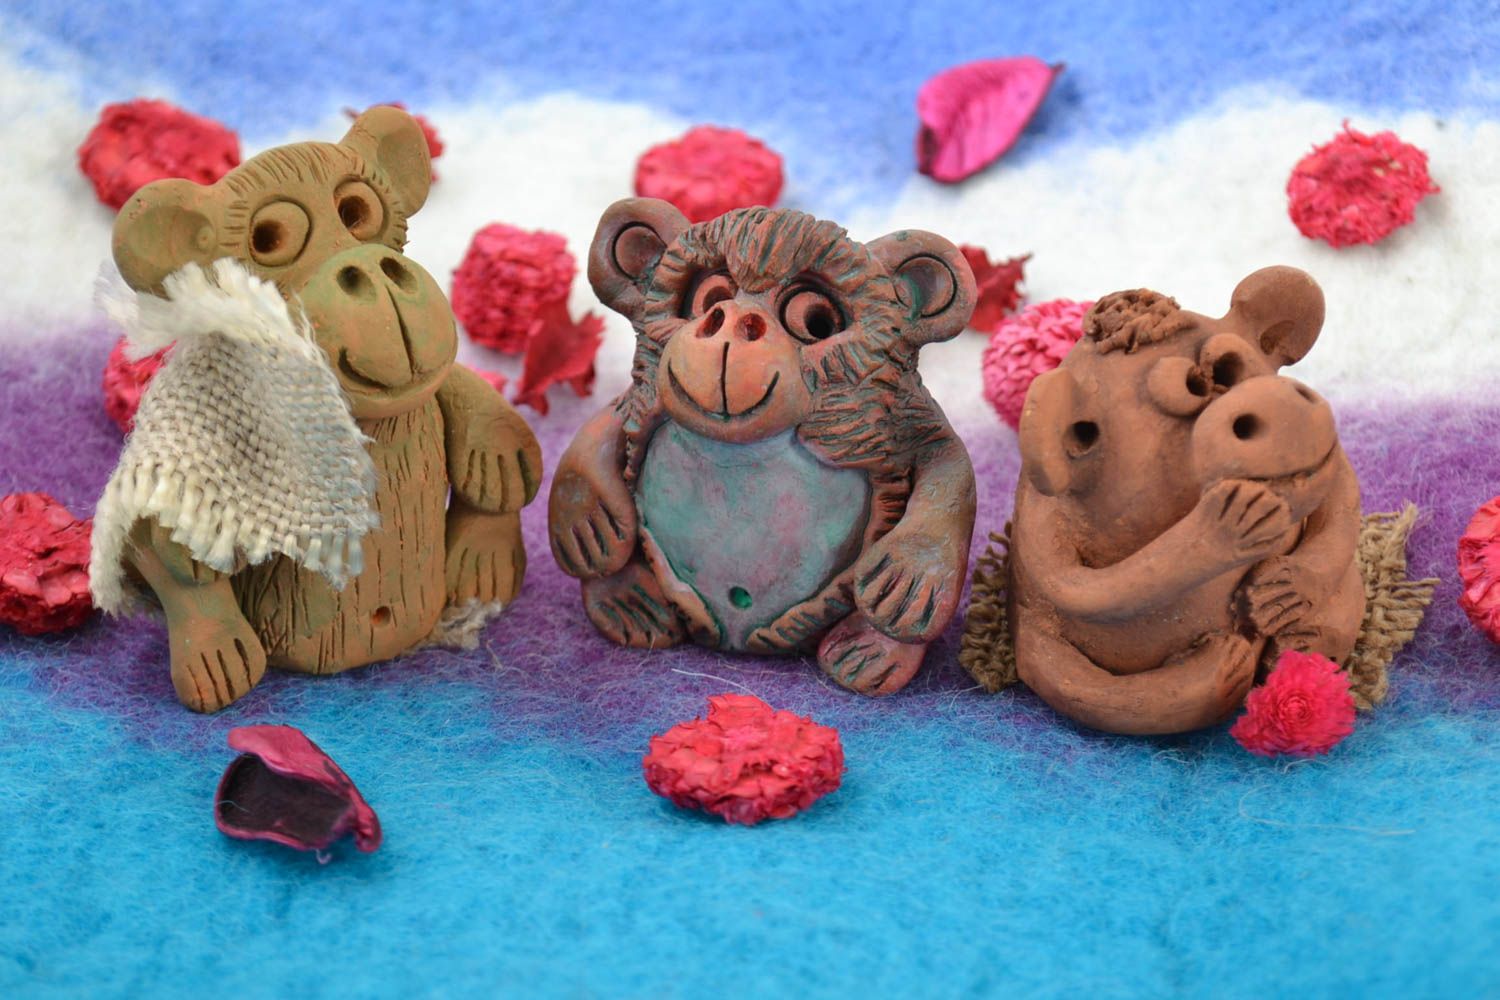 Set of three ceramic clay figurines monkeys handmade decorative home ideas photo 1